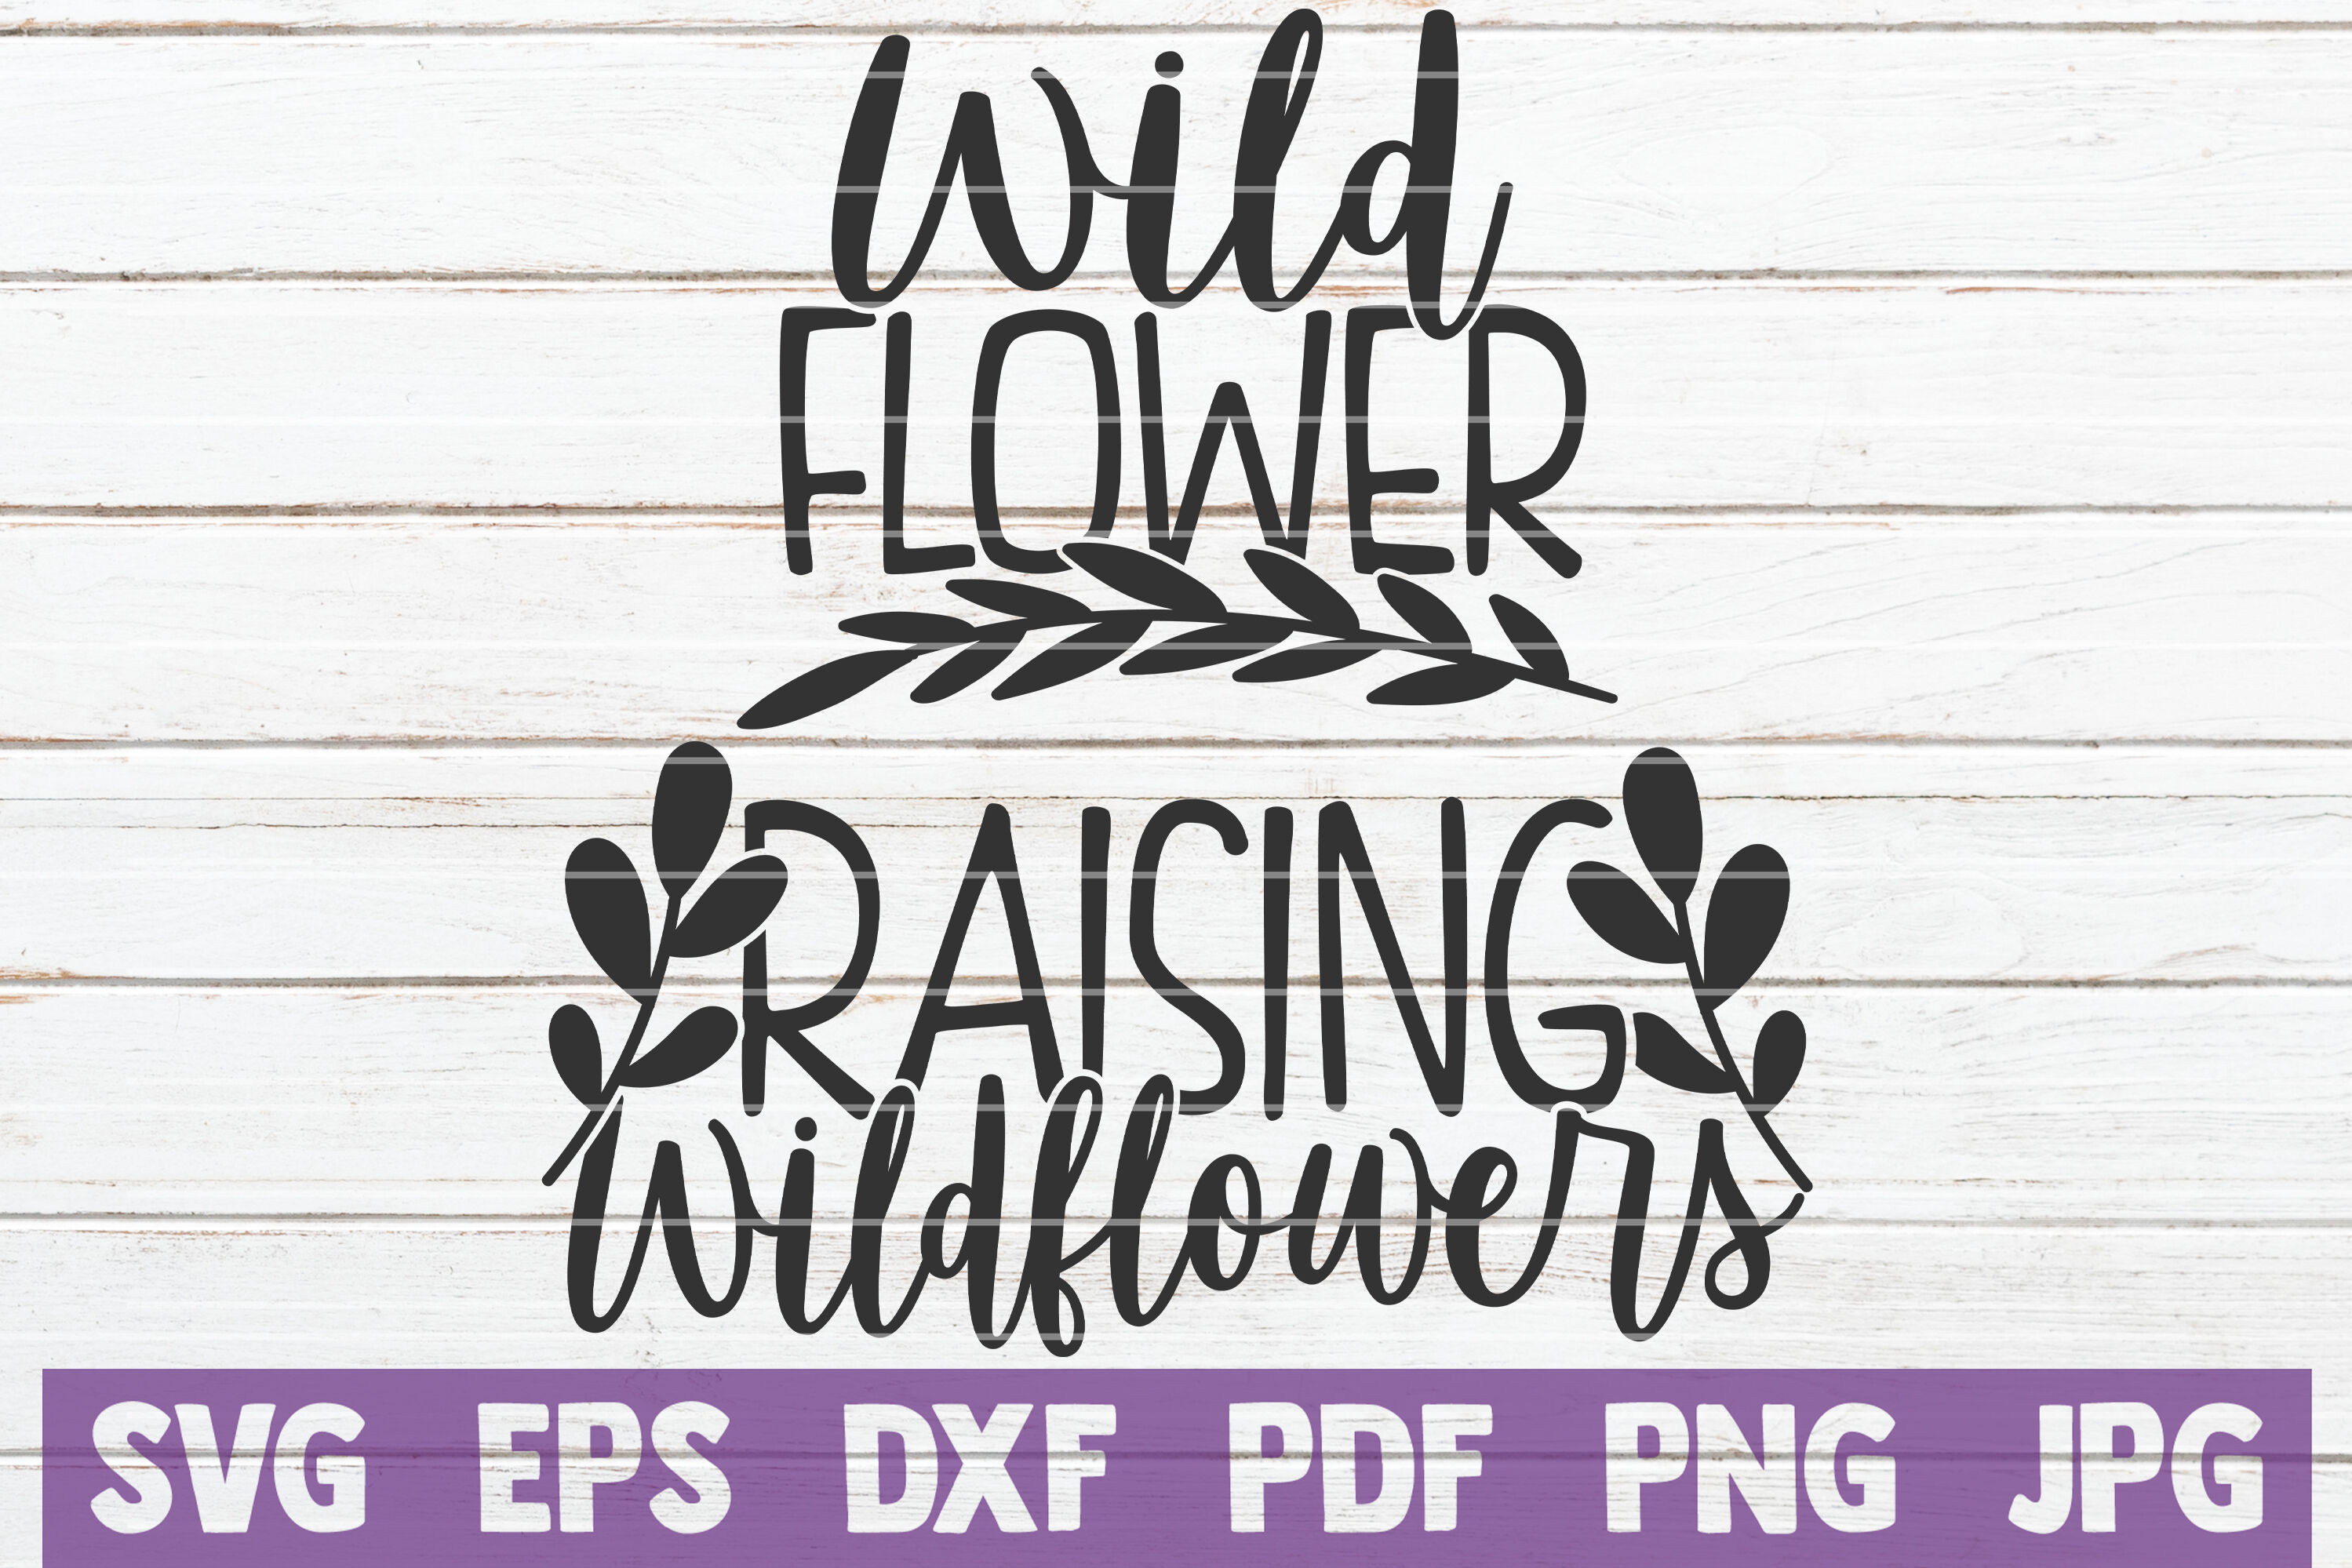 Download Wild Flower Raising Wildflowers Svg Cut Files By Mintymarshmallows Thehungryjpeg Com